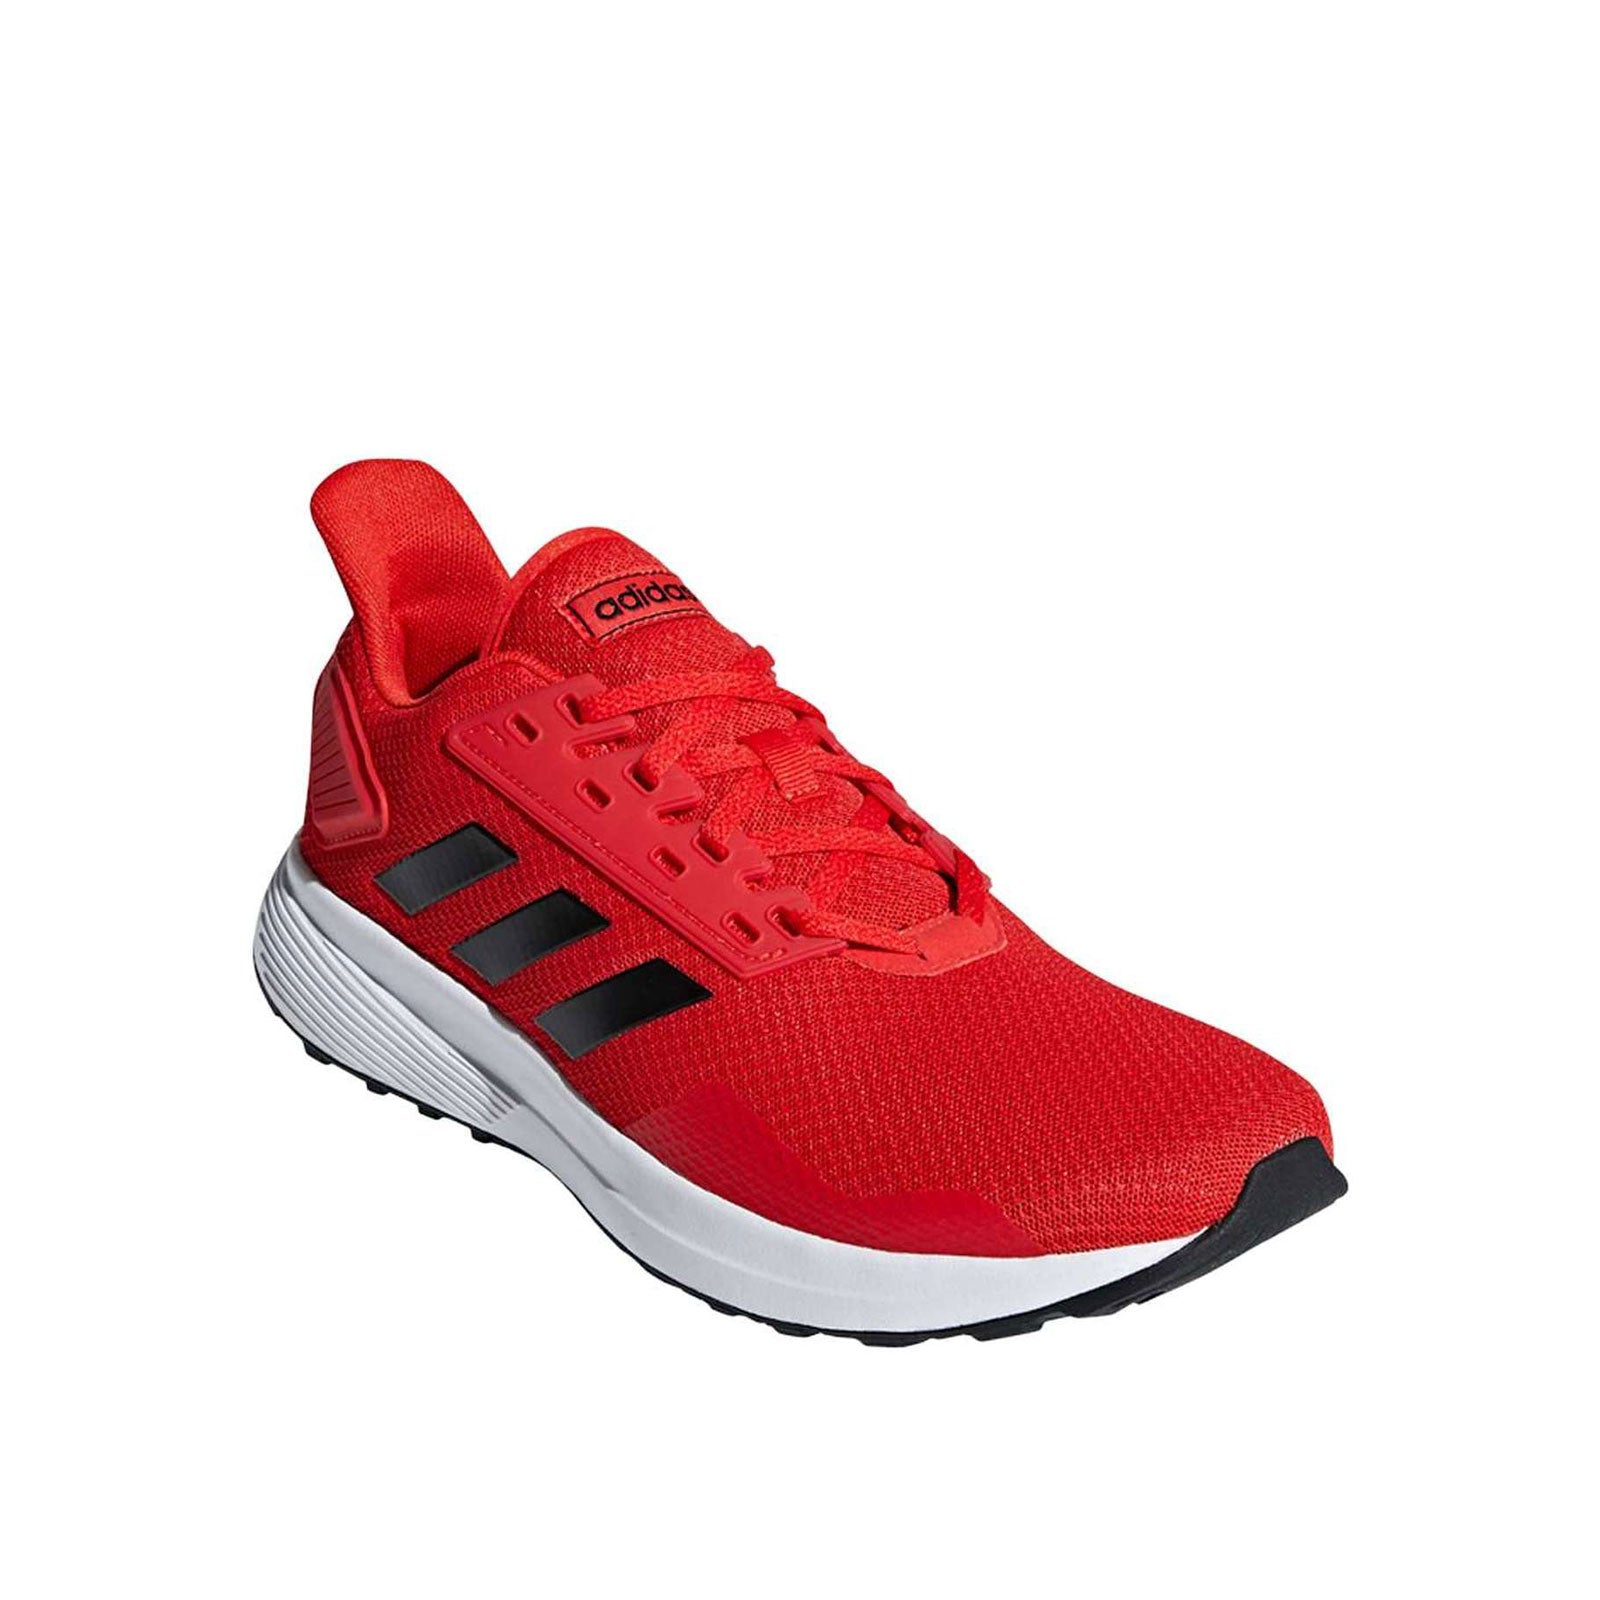 Adidas Duramo 9-Active Red/Black/White